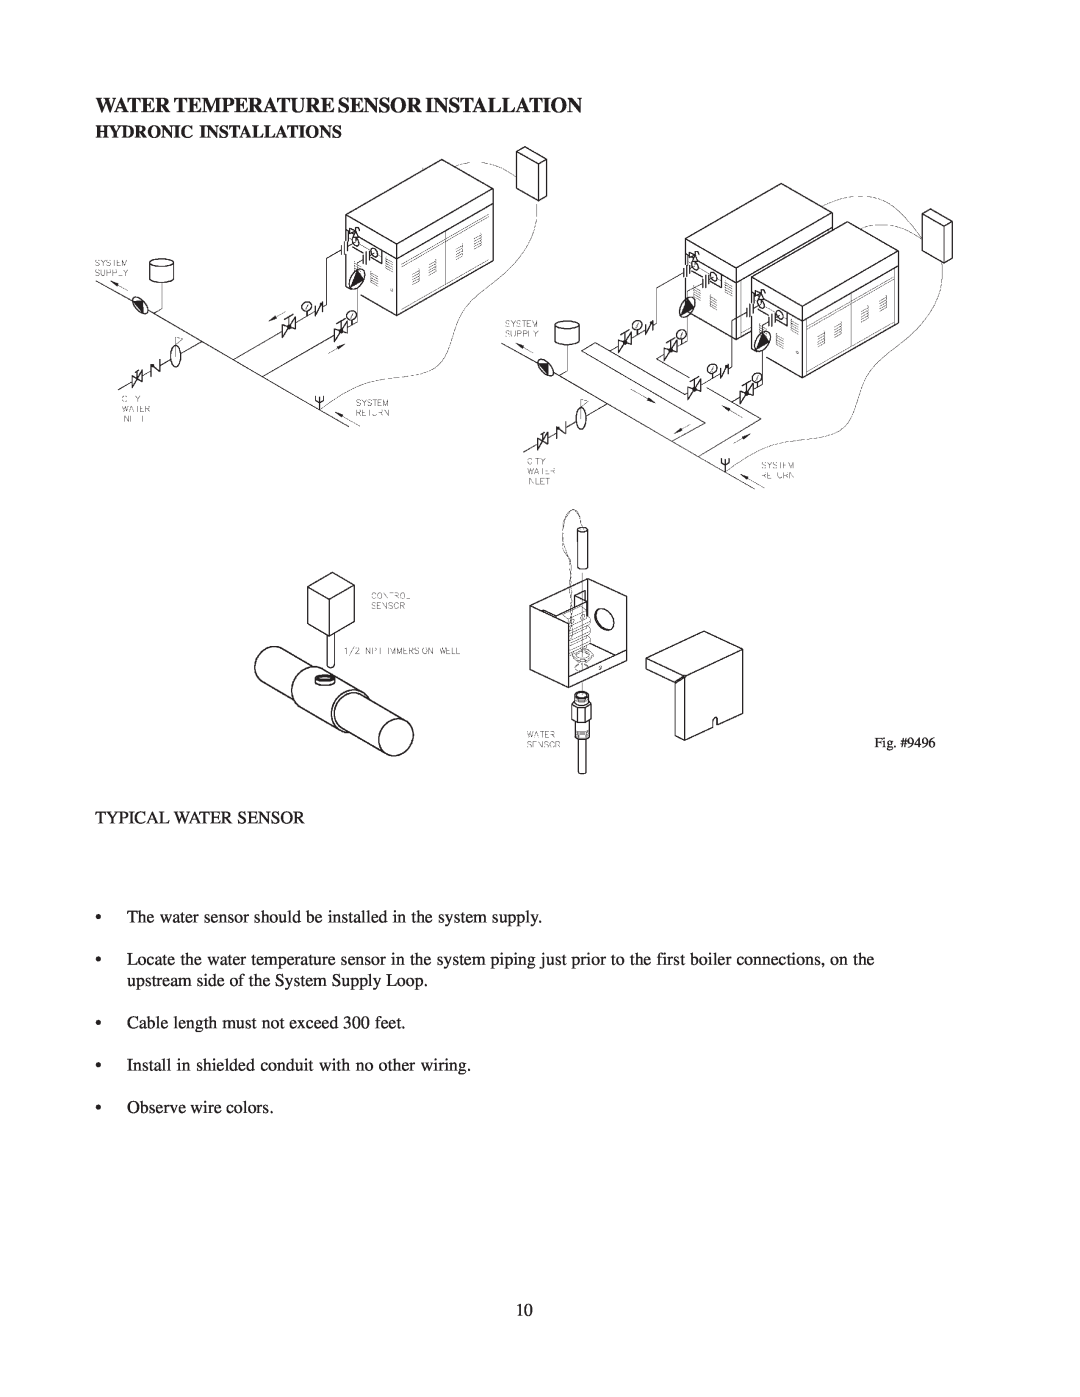 Raypak 240692 manual Water Temperature Sensor Installation, Hydronic Installations 